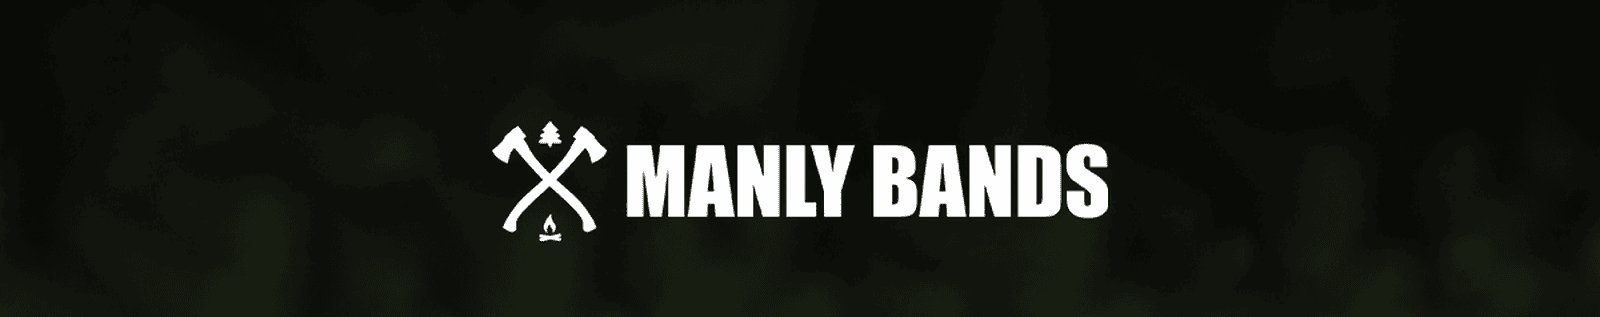 Manly Bands logo